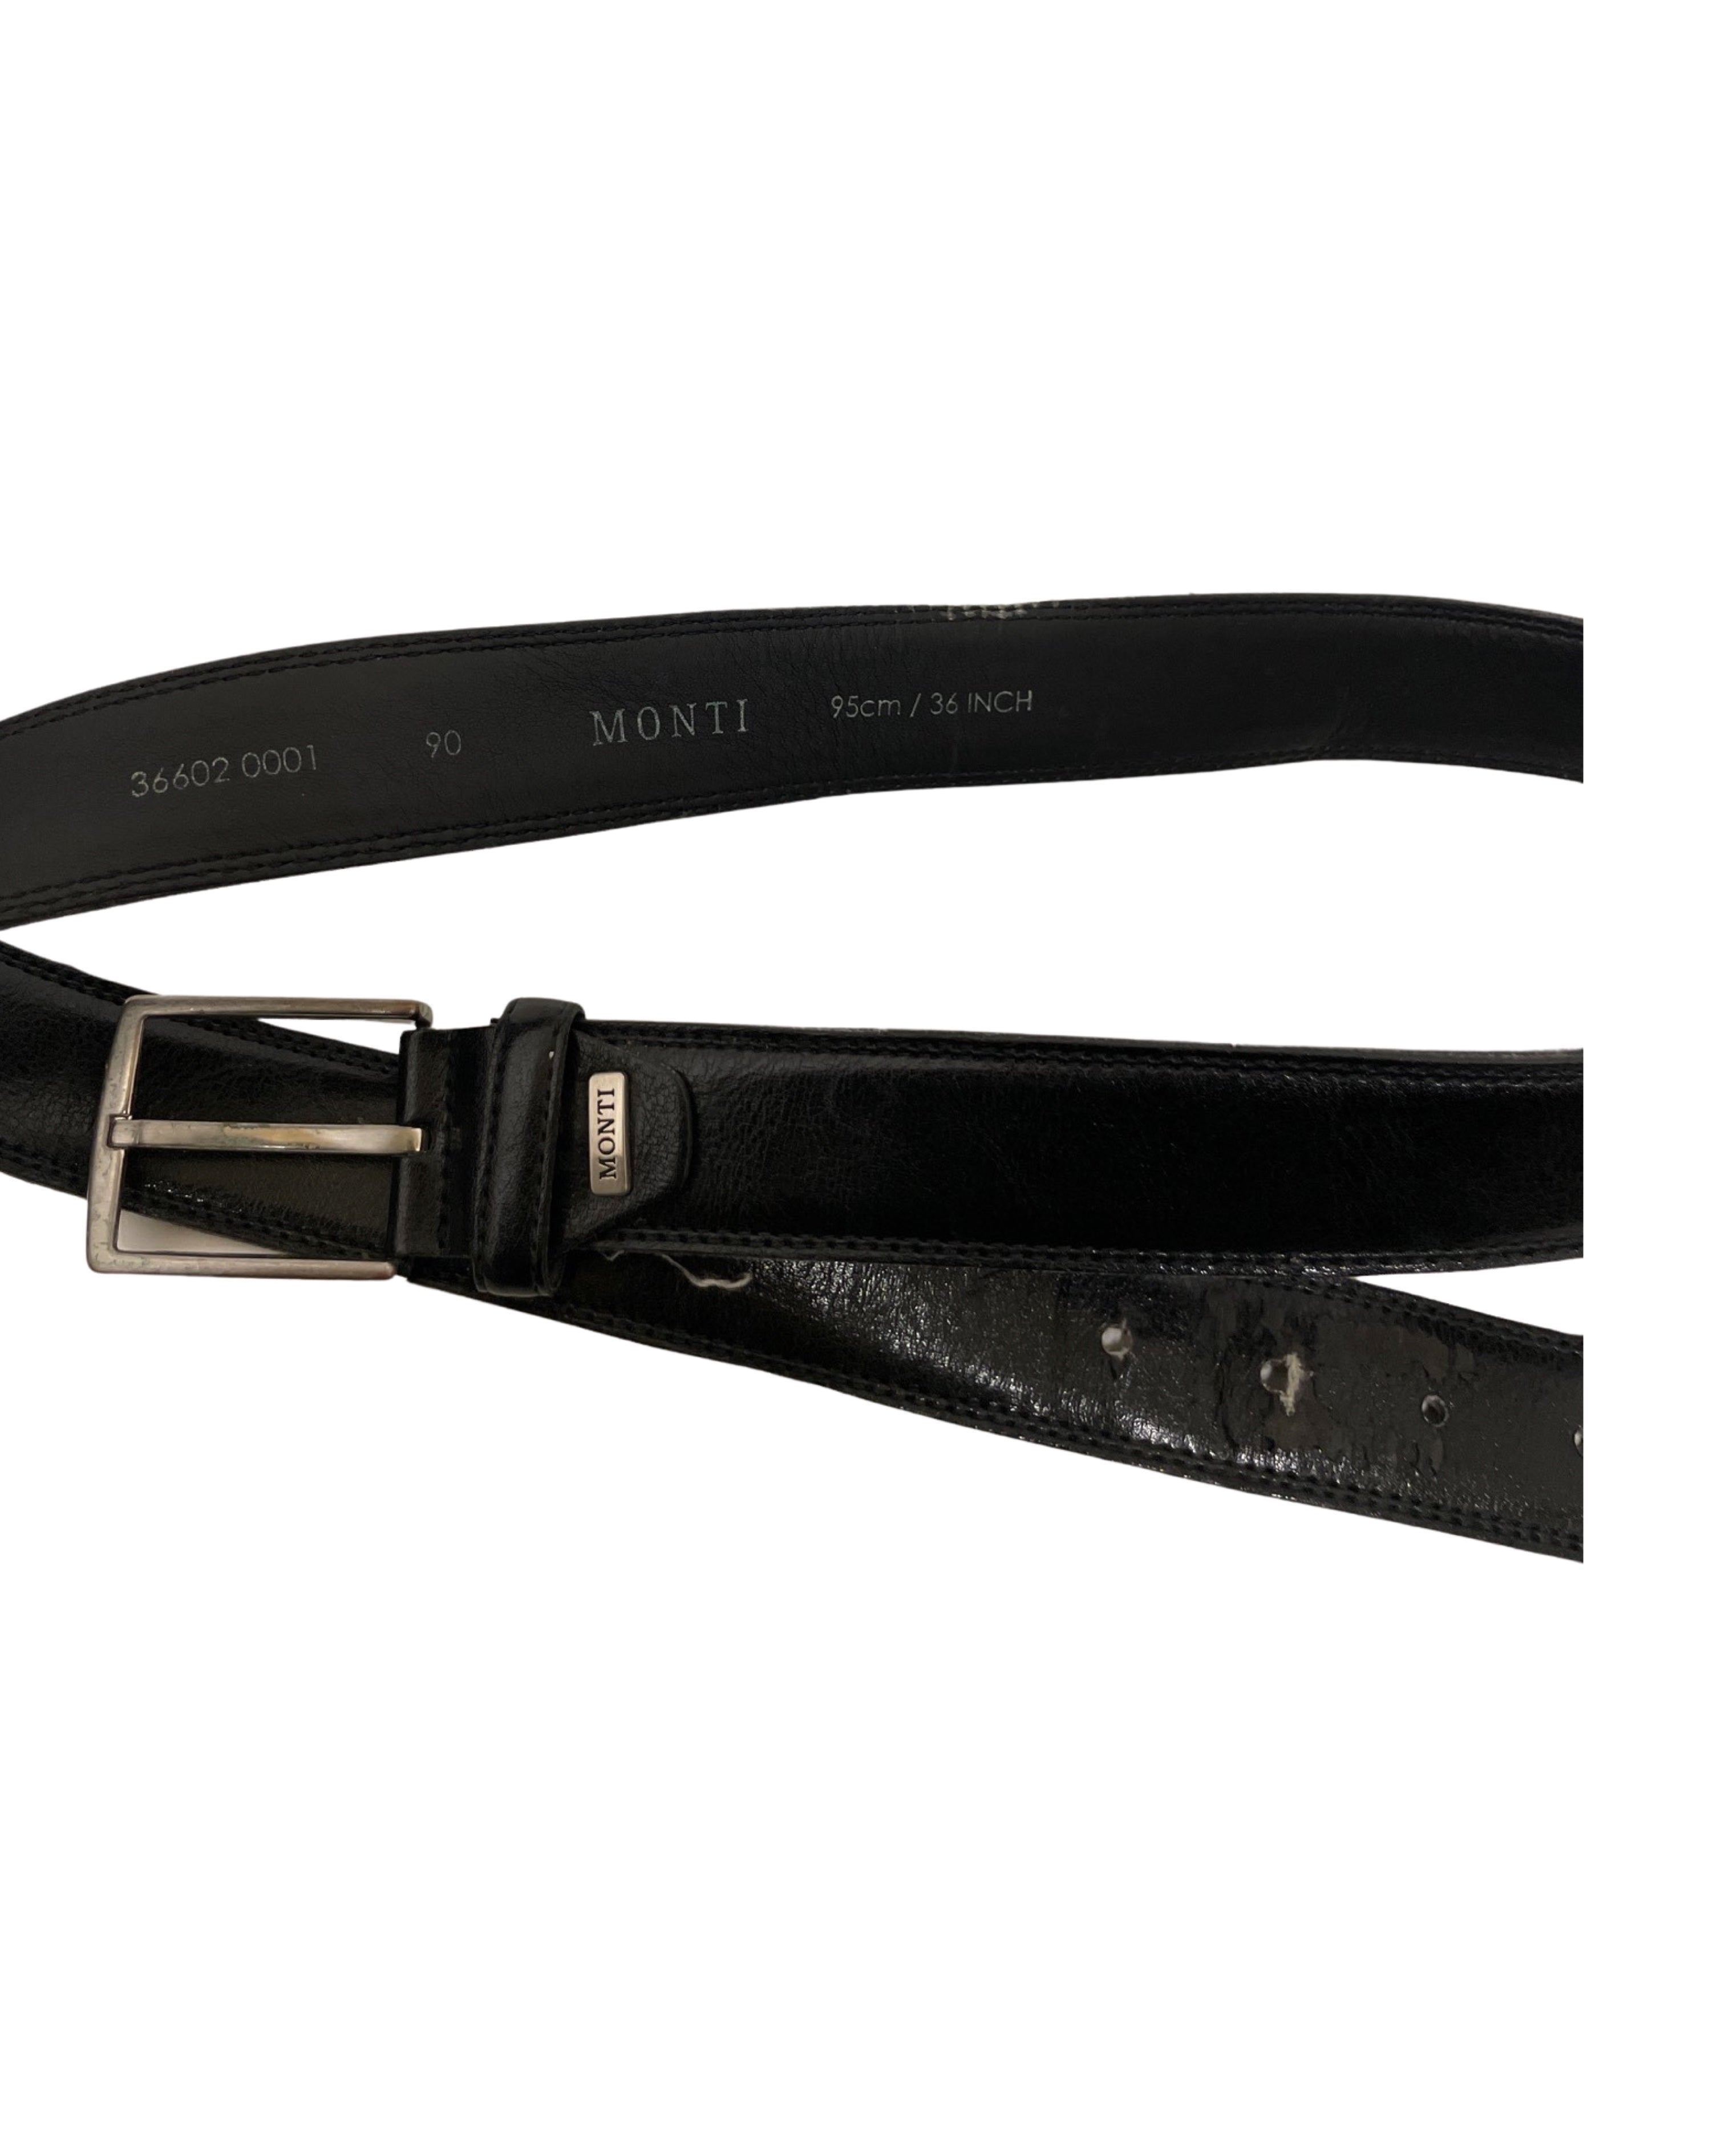 Vintage monti black leather mens belt size l